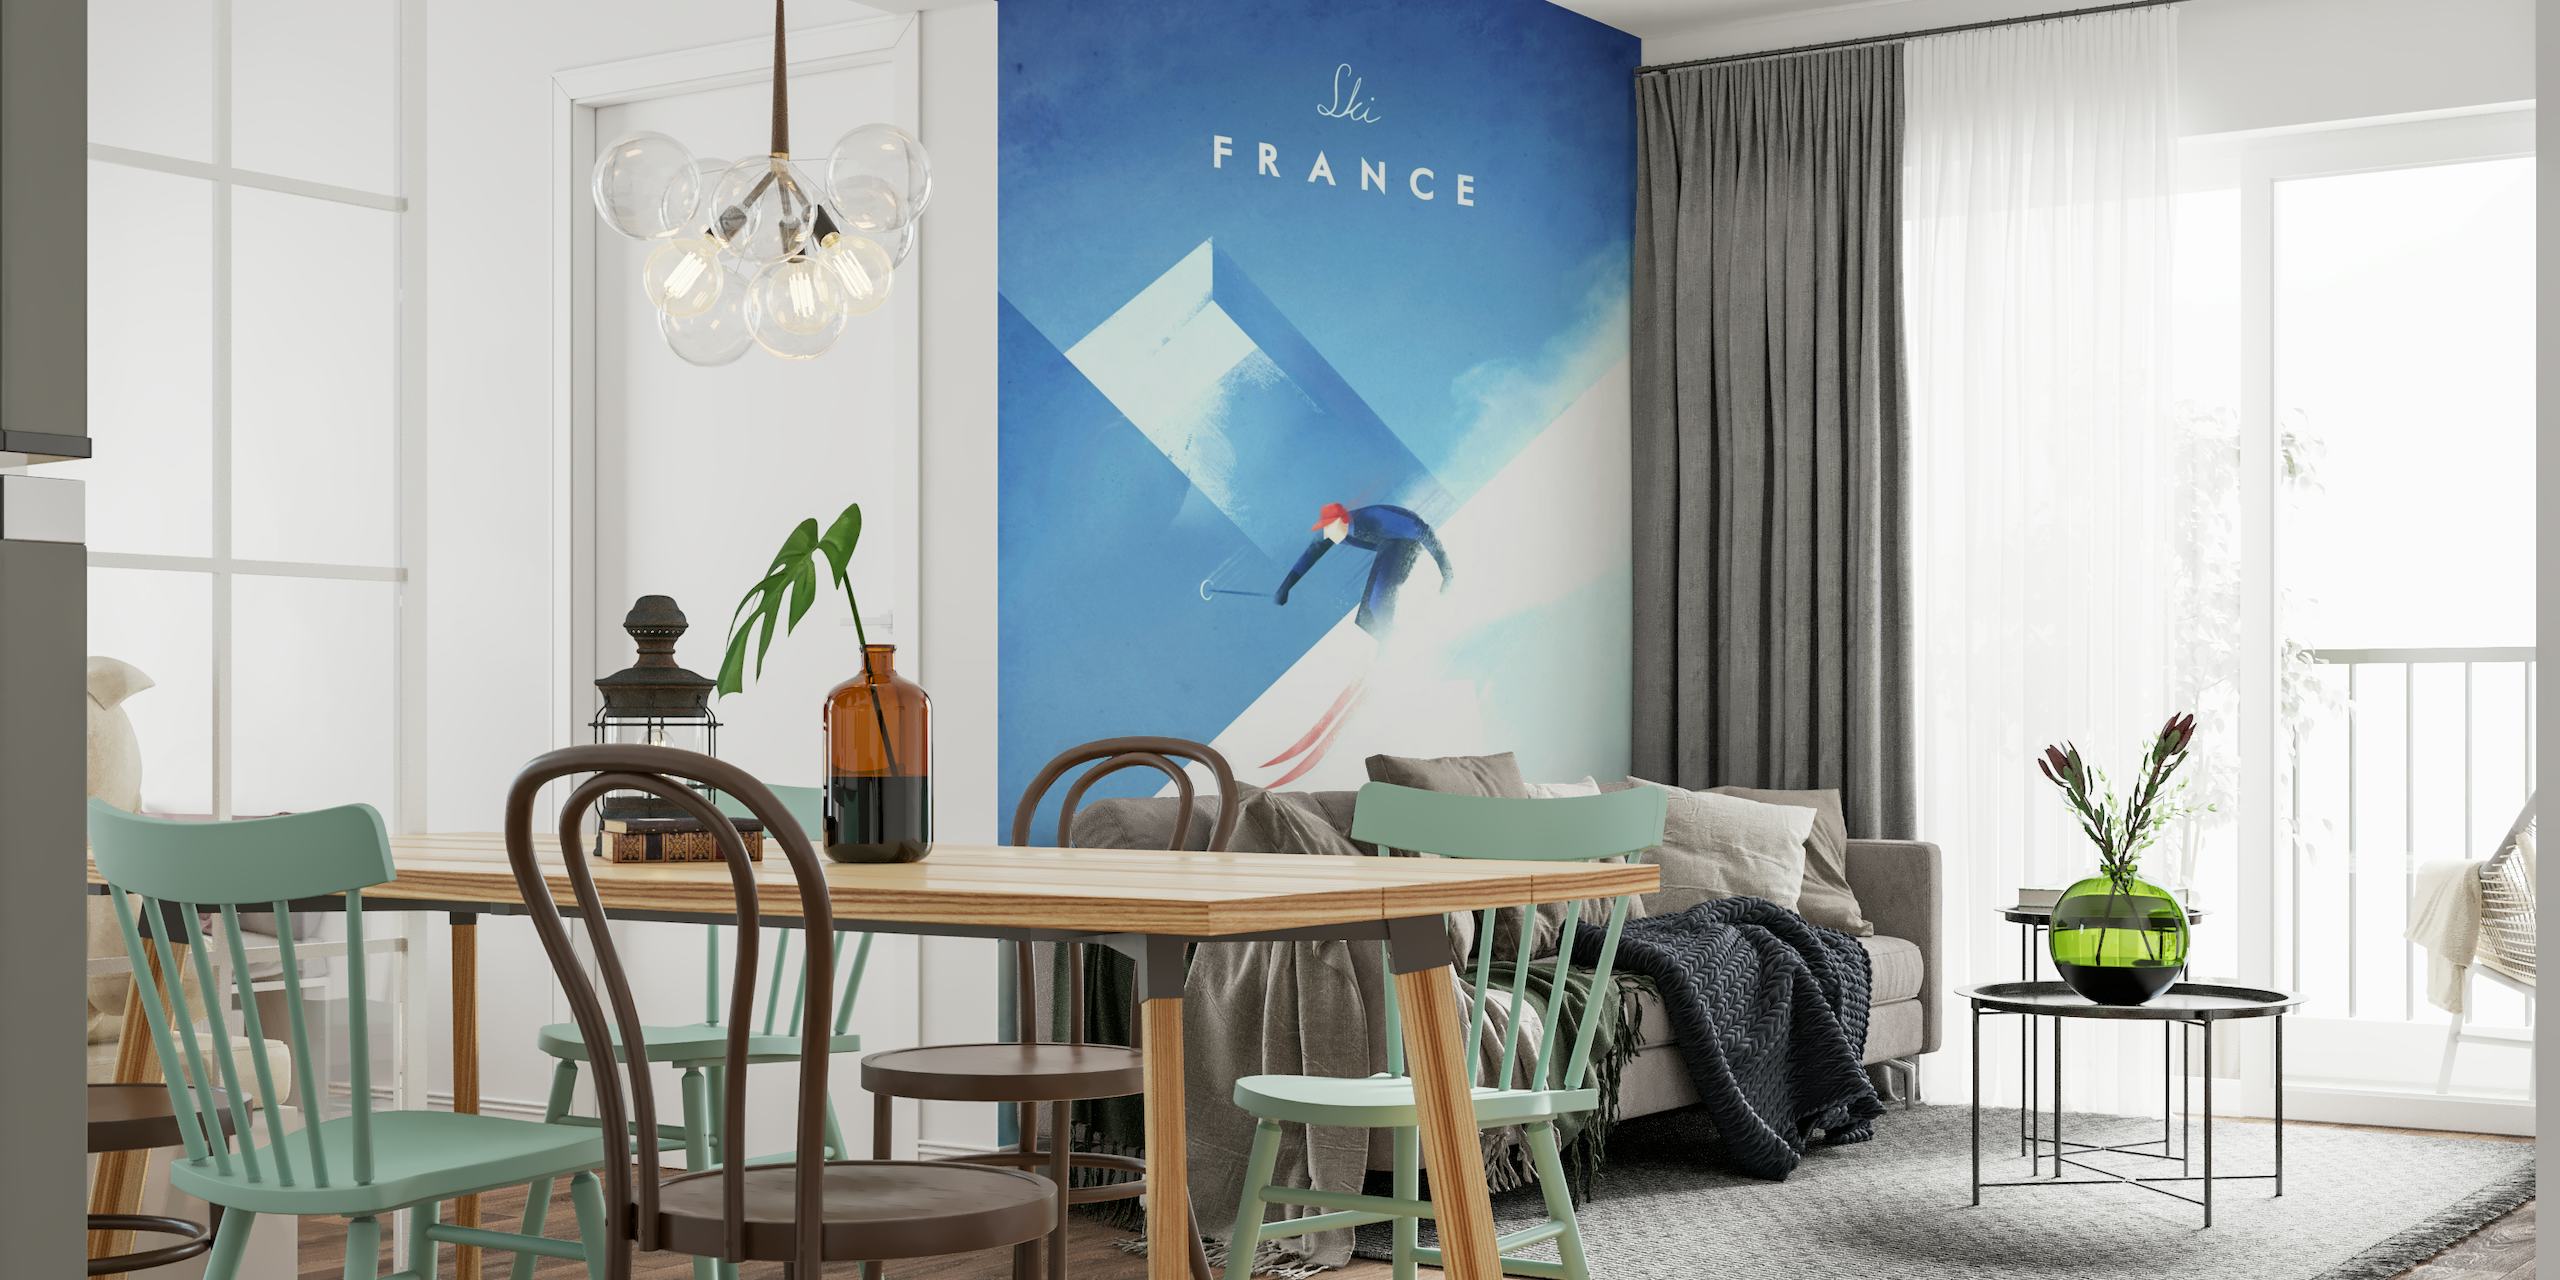 Ski France Travel Poster tapeta